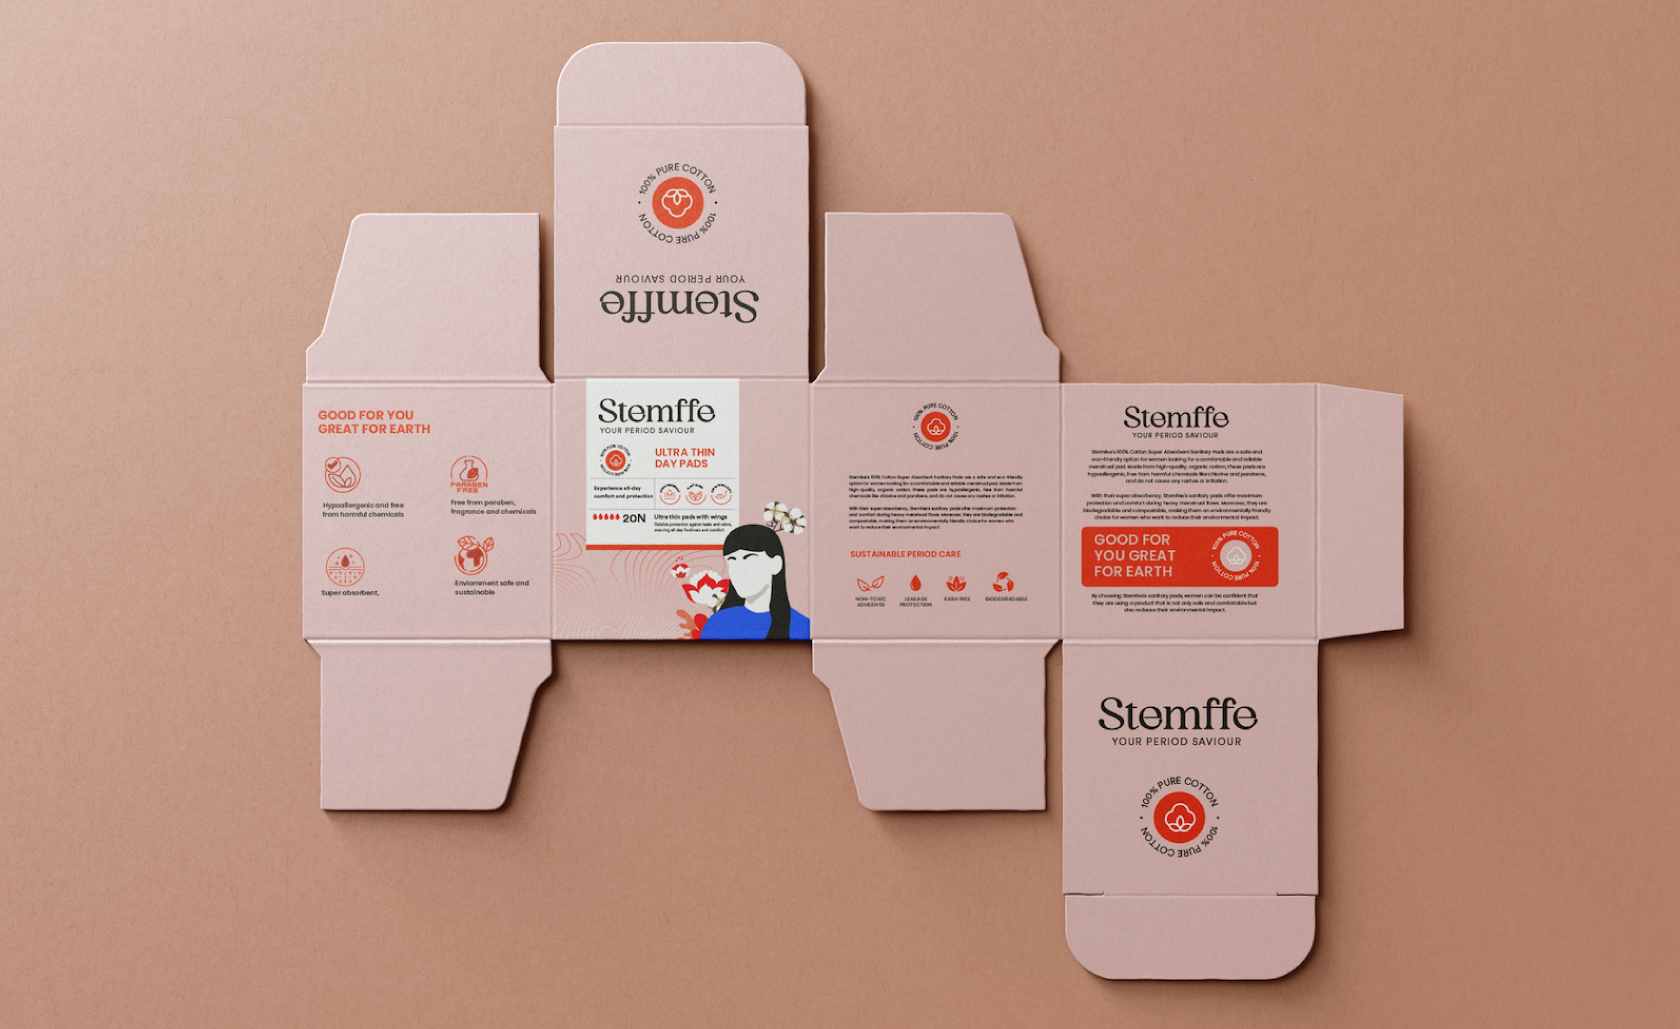 Stemffe - Female Hygiene branding and product packaging by Devolv Studio